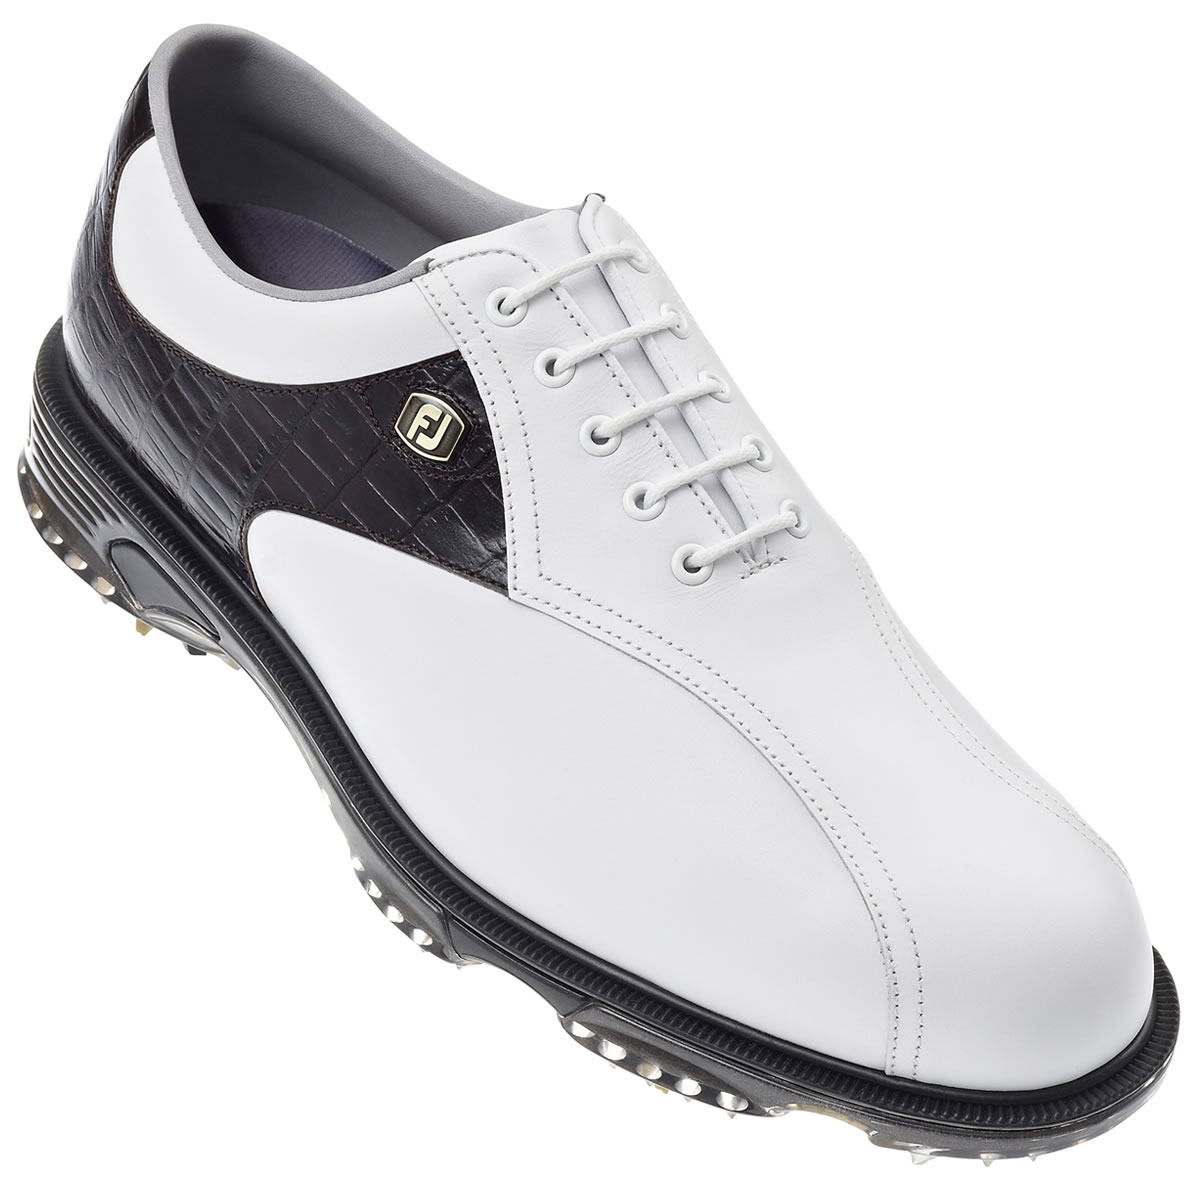 FootJoy DryJoys Tour Golf Shoes White/Brown Croc